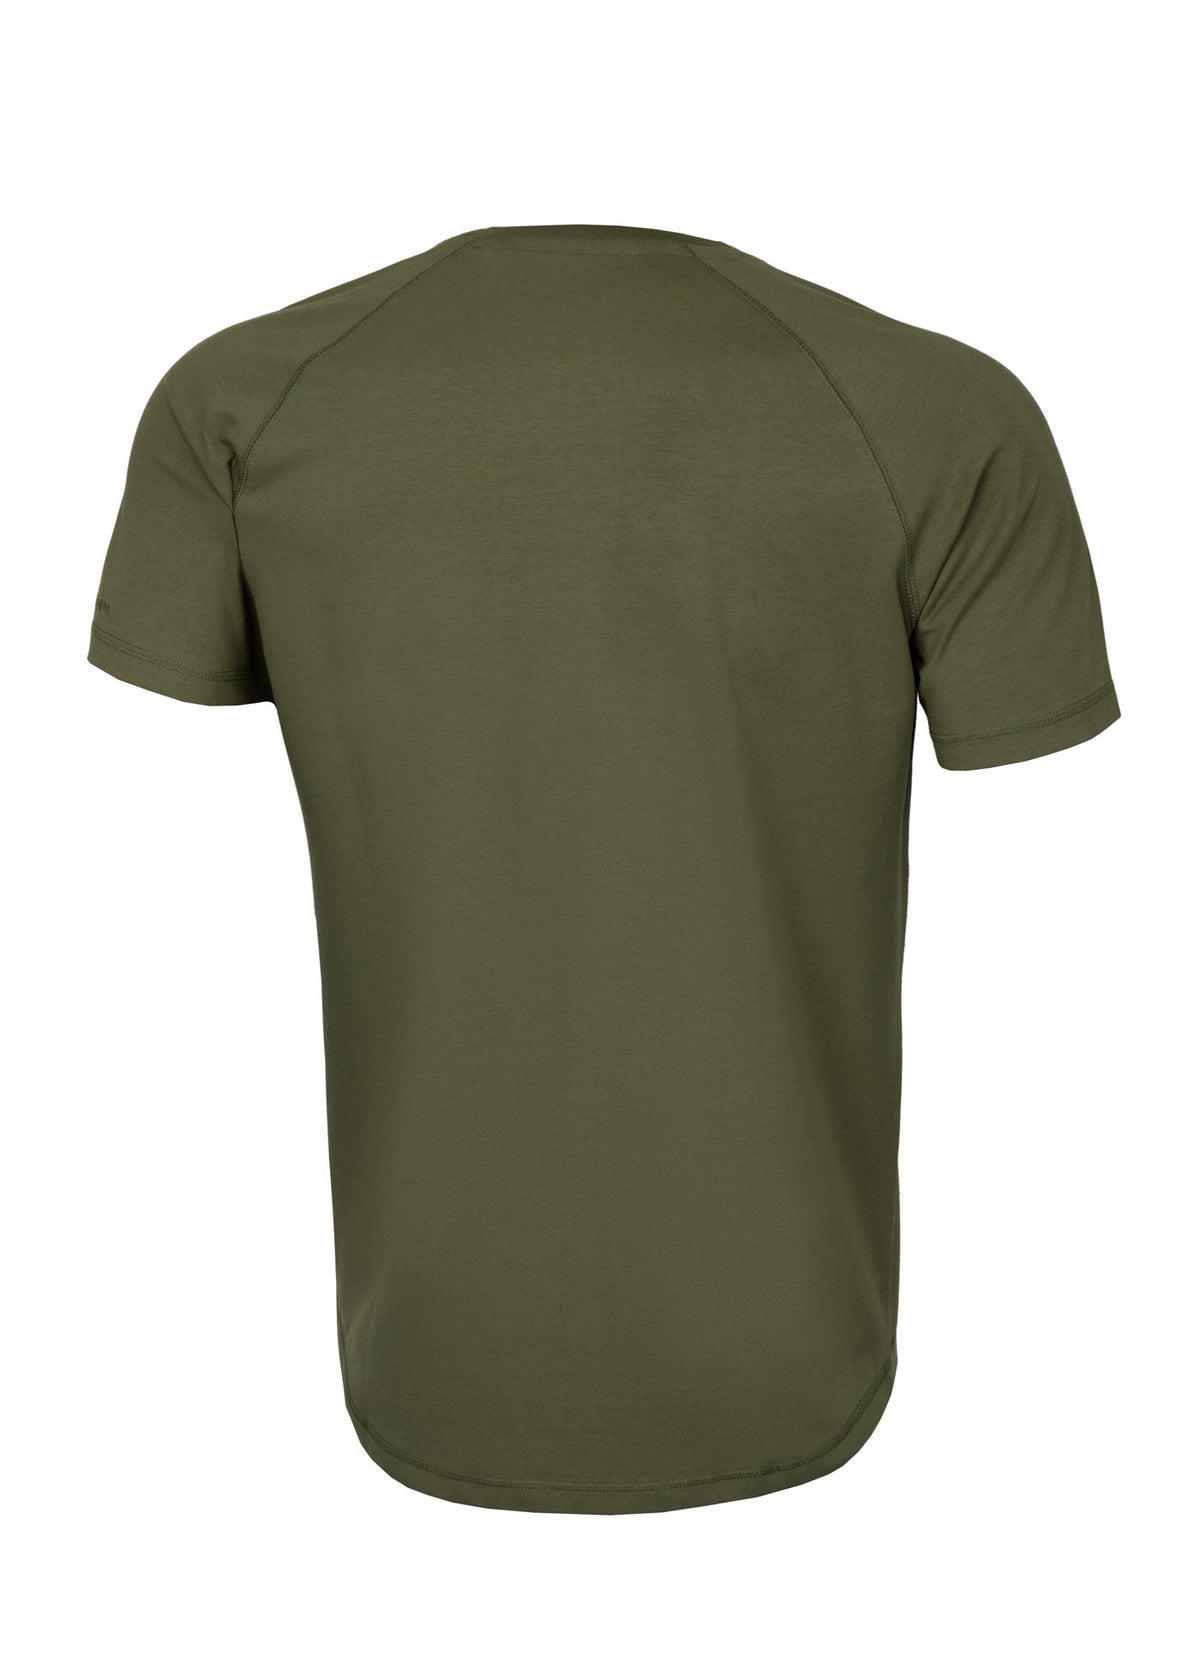 HILLTOP Spandex Heavyweight Olive T-shirt.